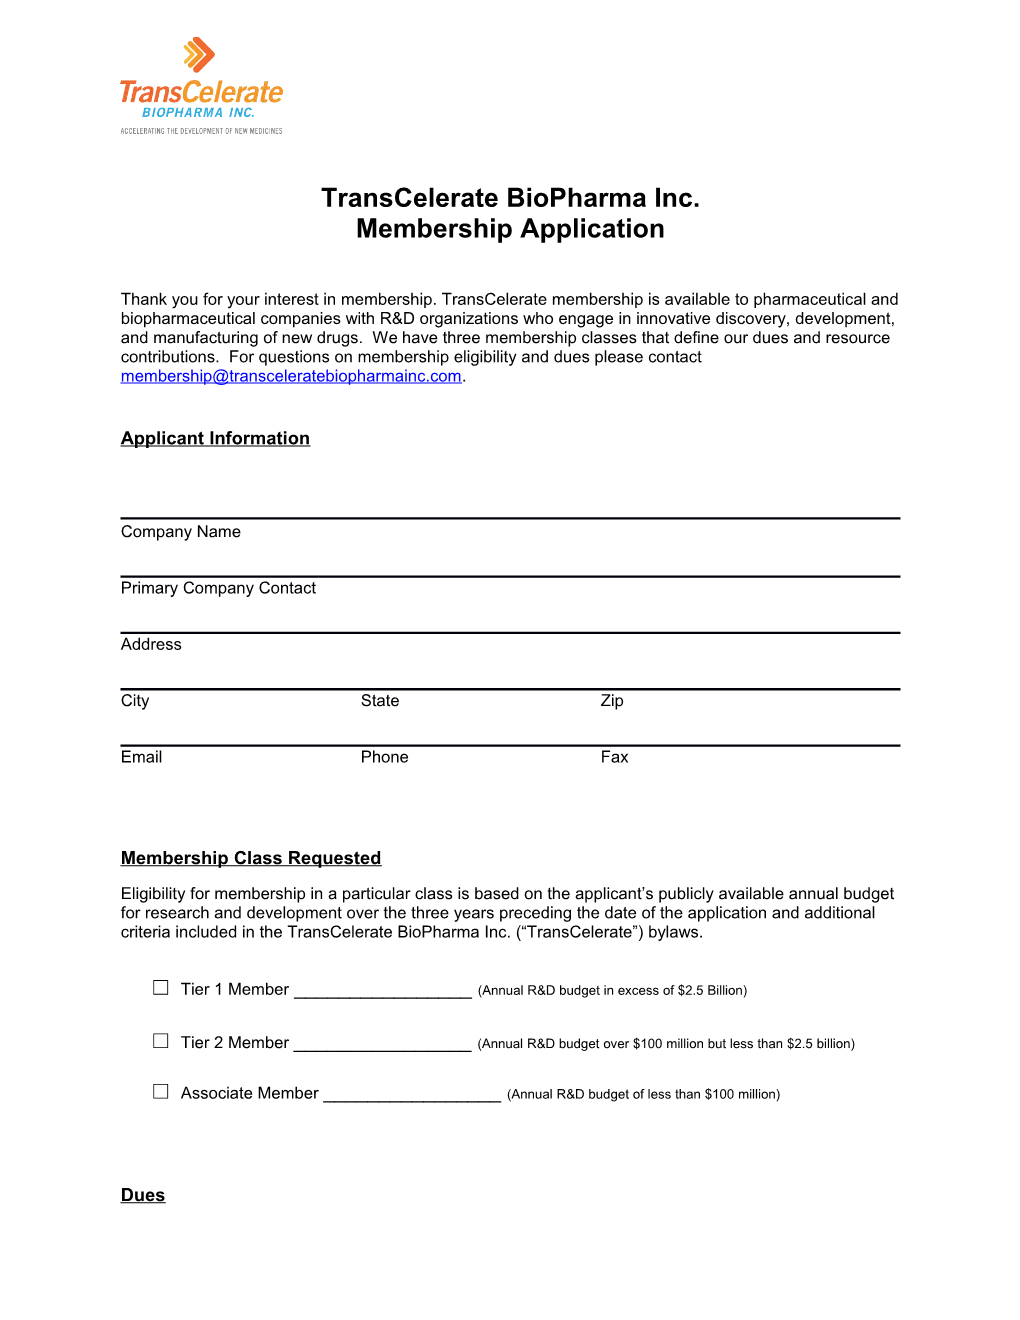 Transcelerate Biopharma Inc. Membership Application